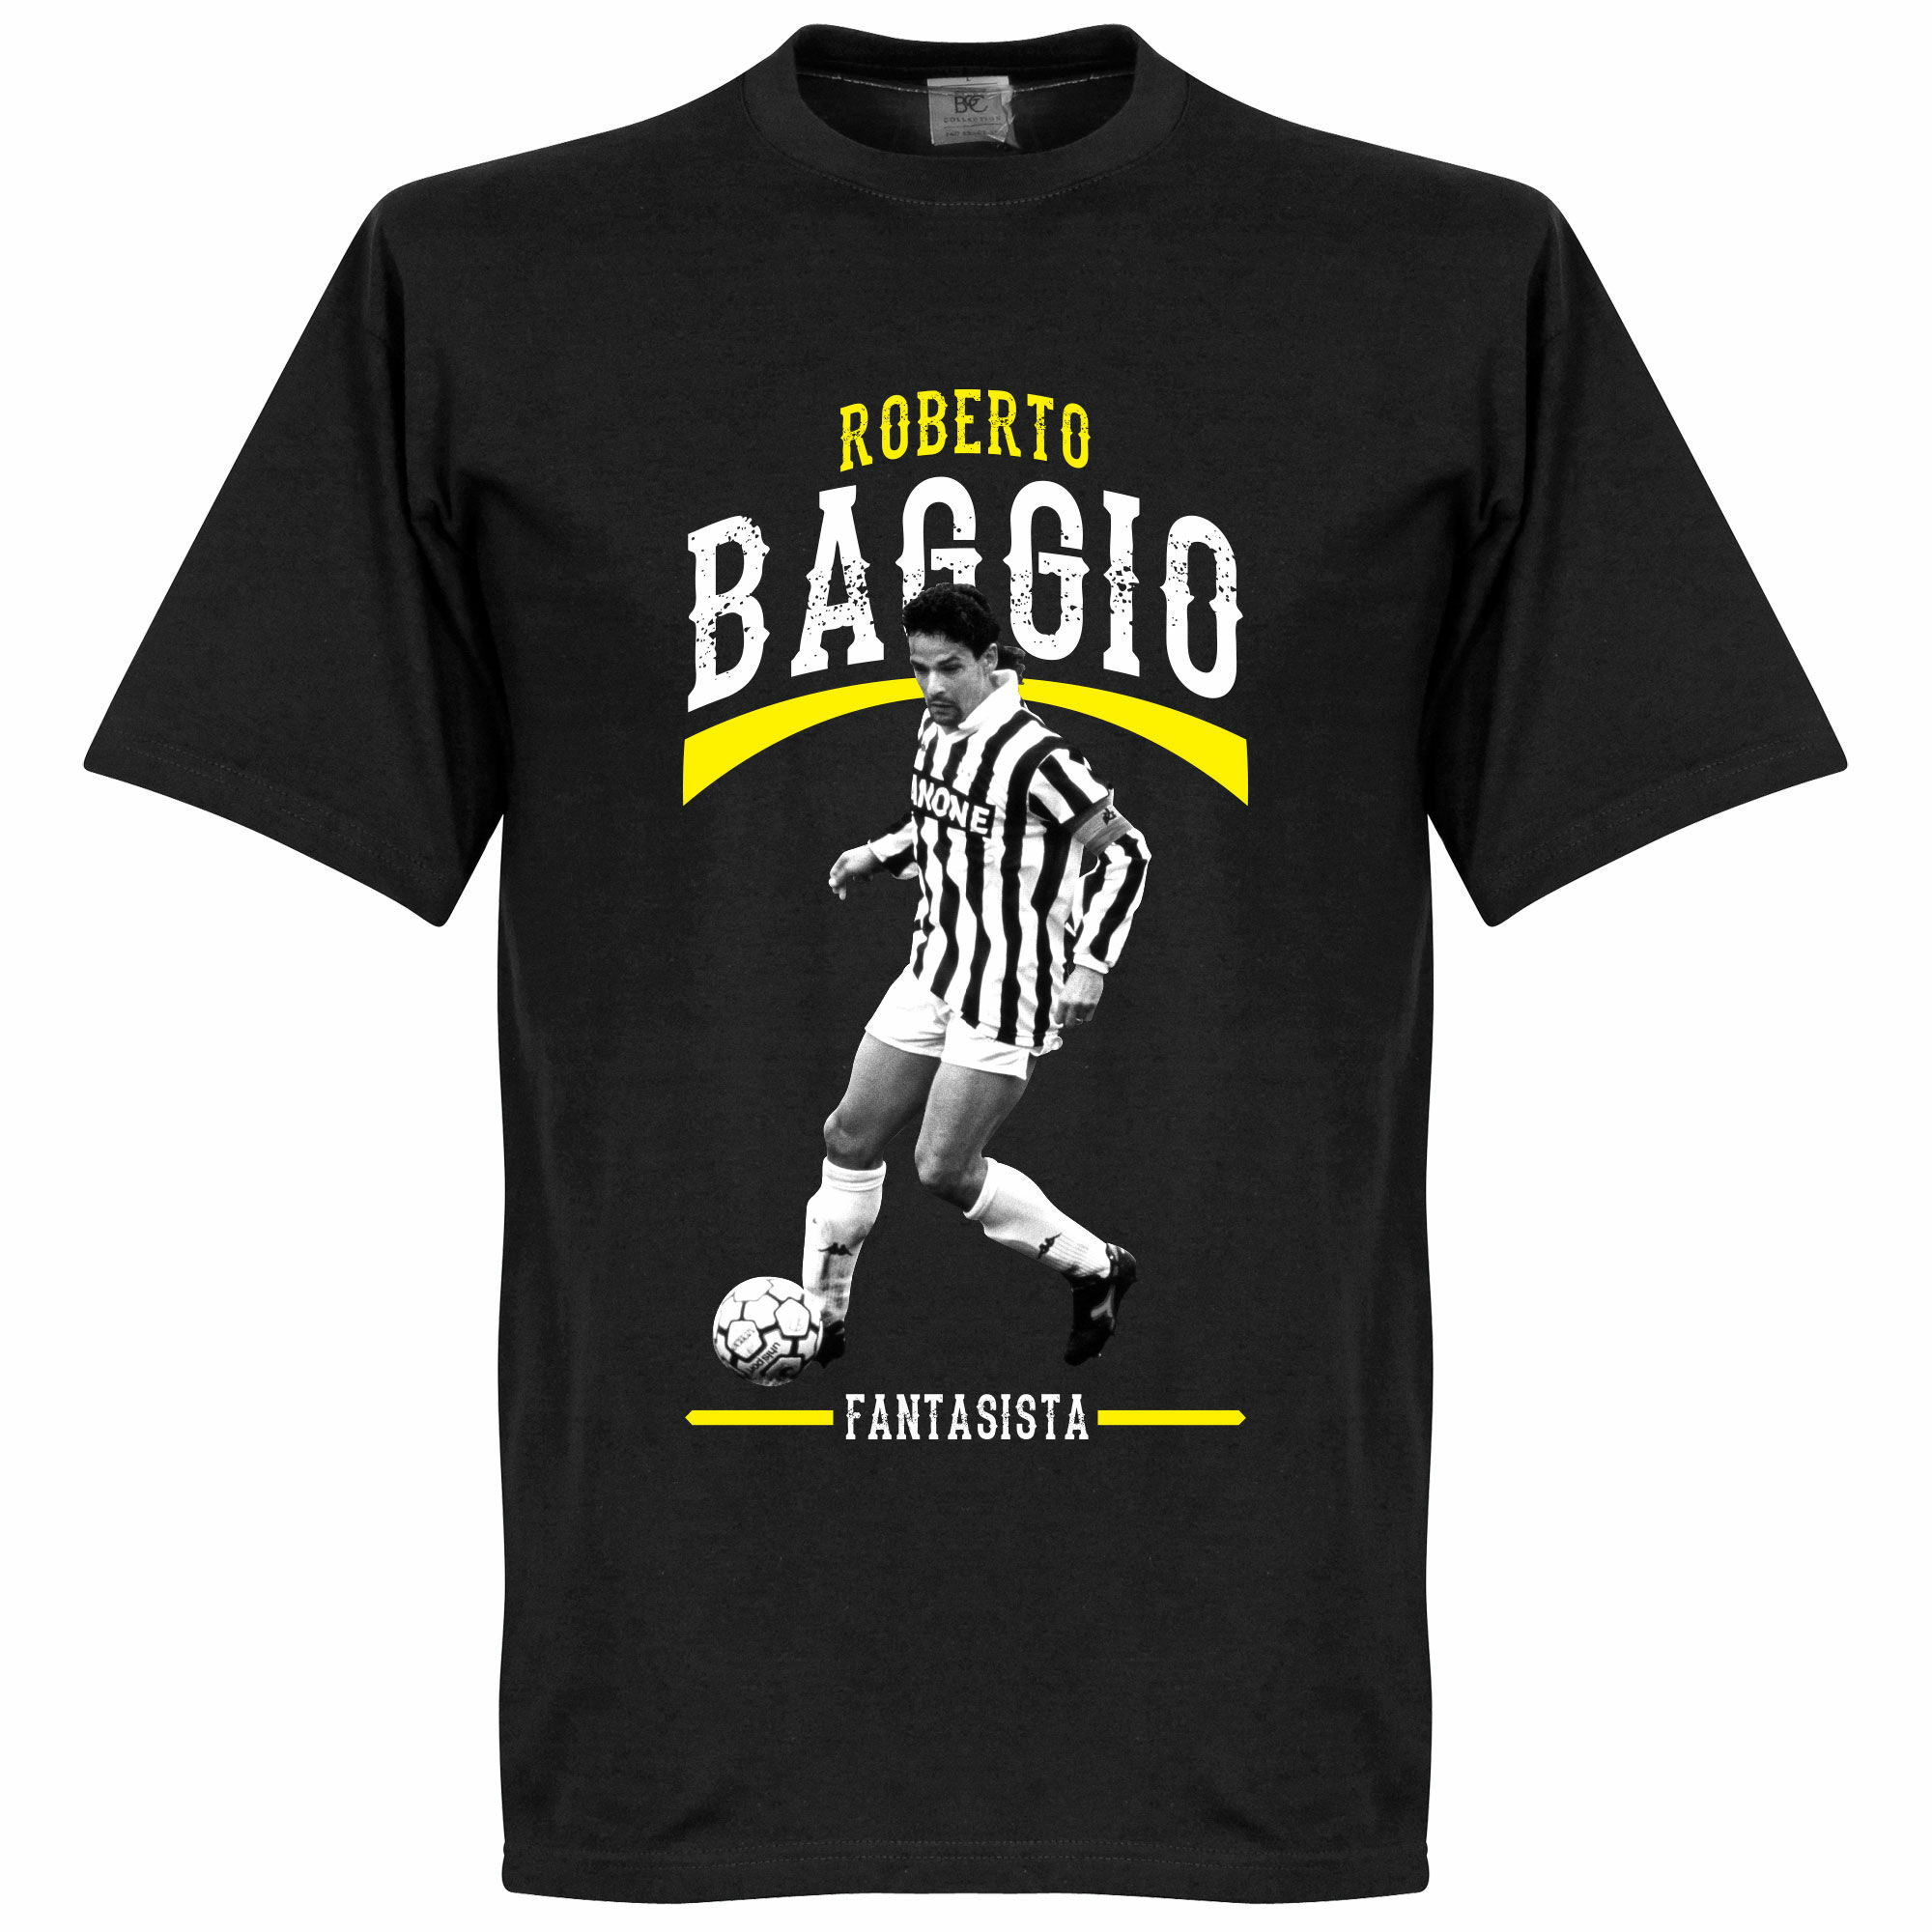 Juventus FC - Tričko "Fantasista" dětské - Roberto Baggio, černé